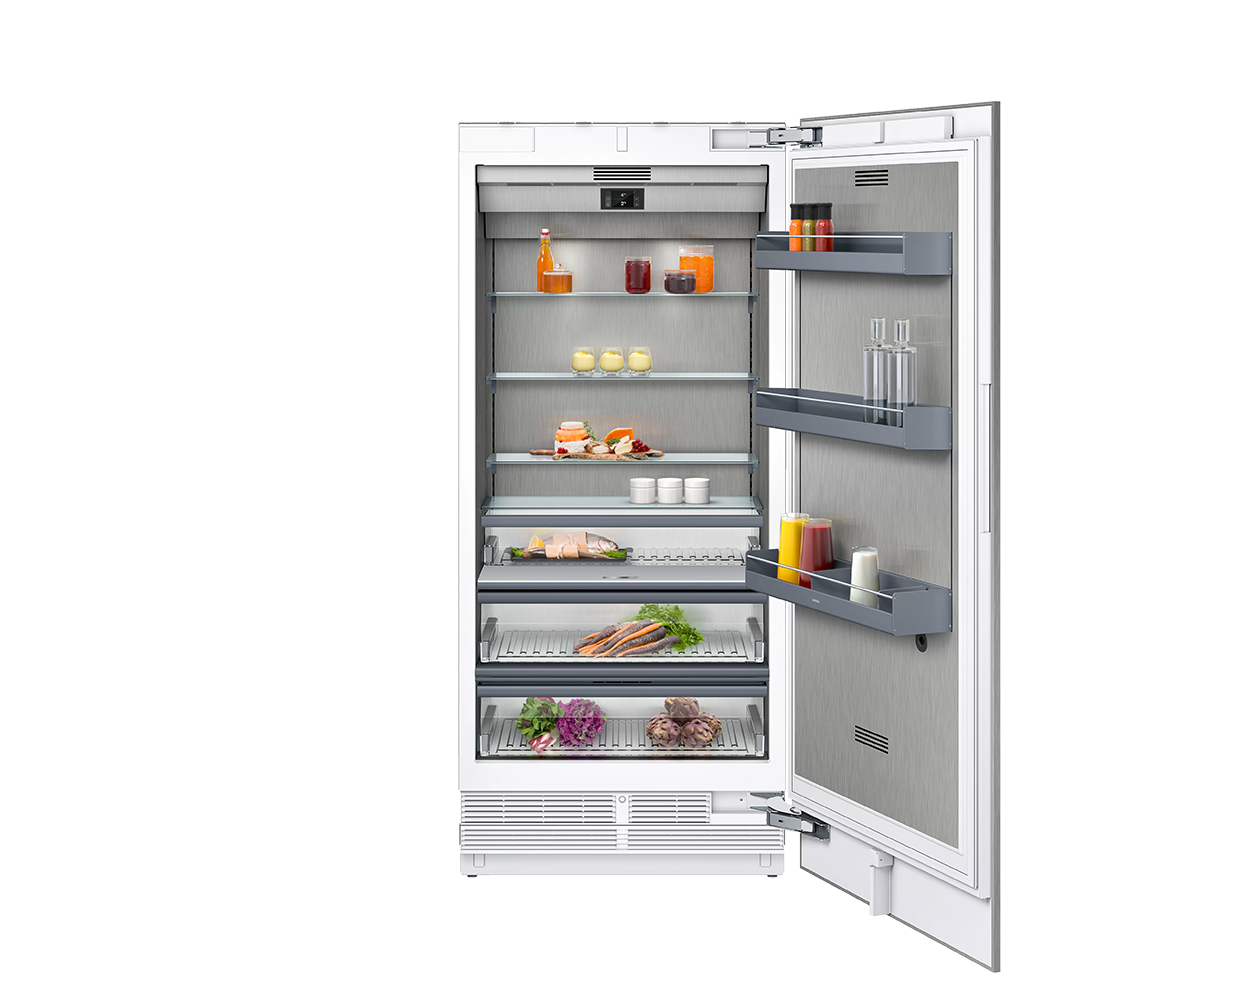 Luxury kitchen appliance brand Gaggenau 400 series Free standing / Integrated Refrigerator / Fridge . Buy in the UK with Krieder.